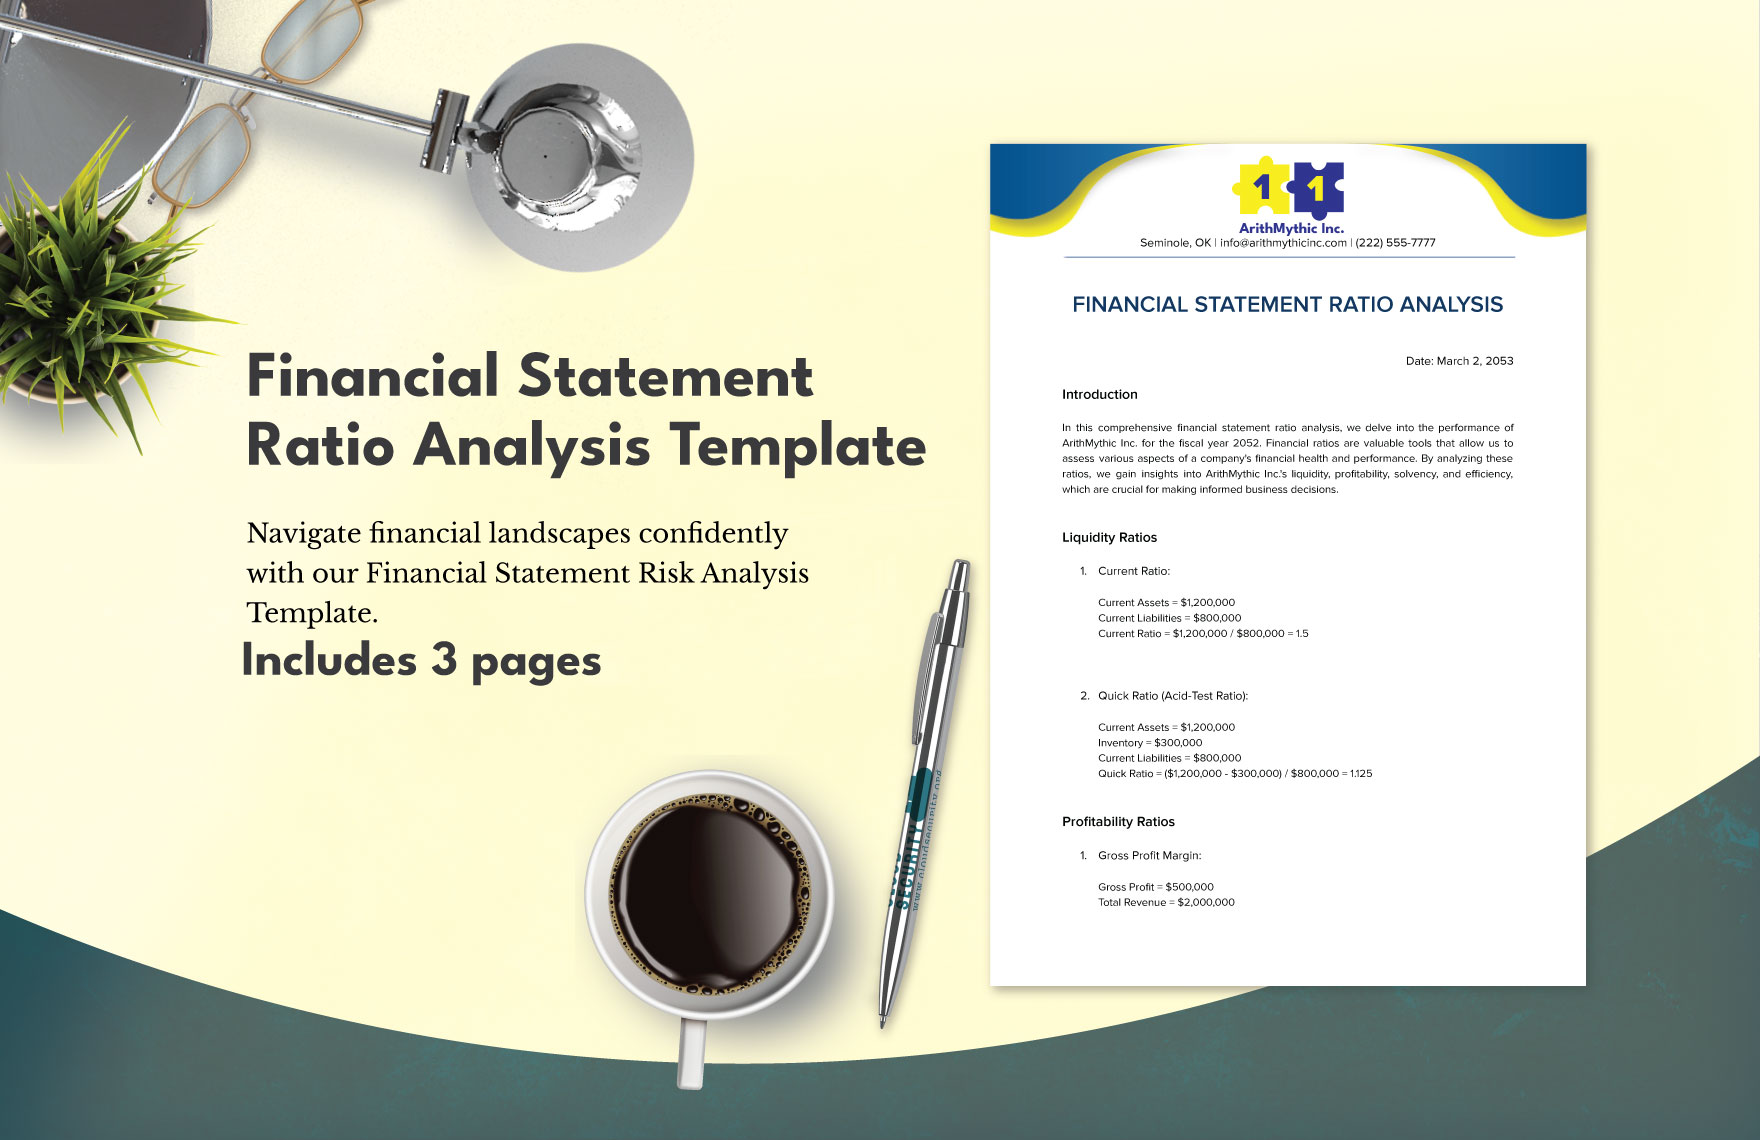 Financial Statement Ratio Analysis Template